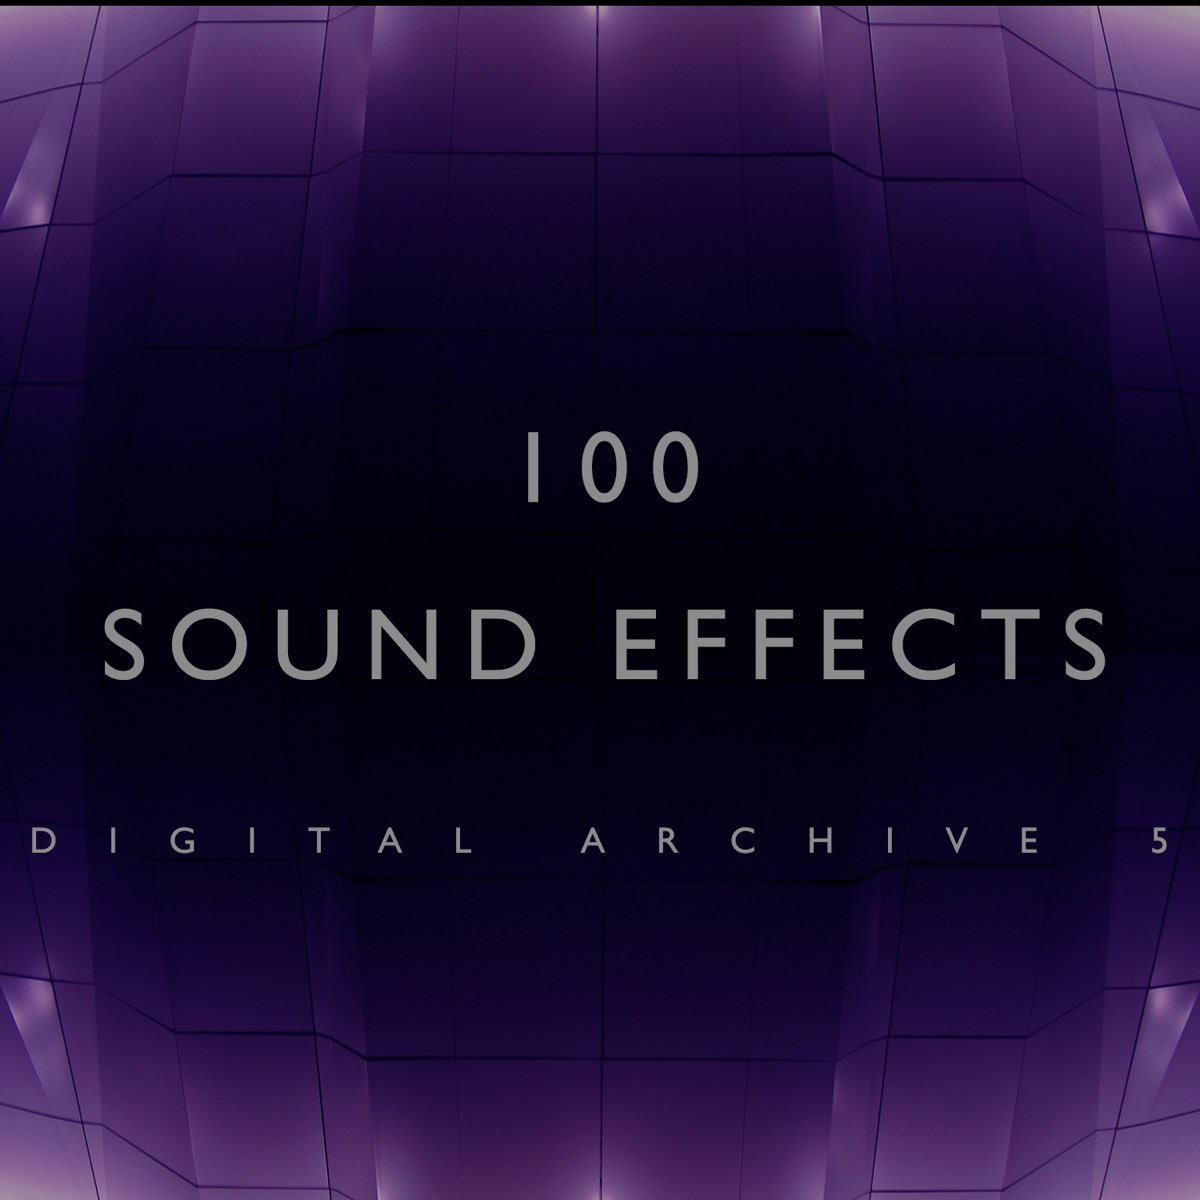 Echo Sound Effect. D4c звук. Sound 100. Звук на 100. Group effects